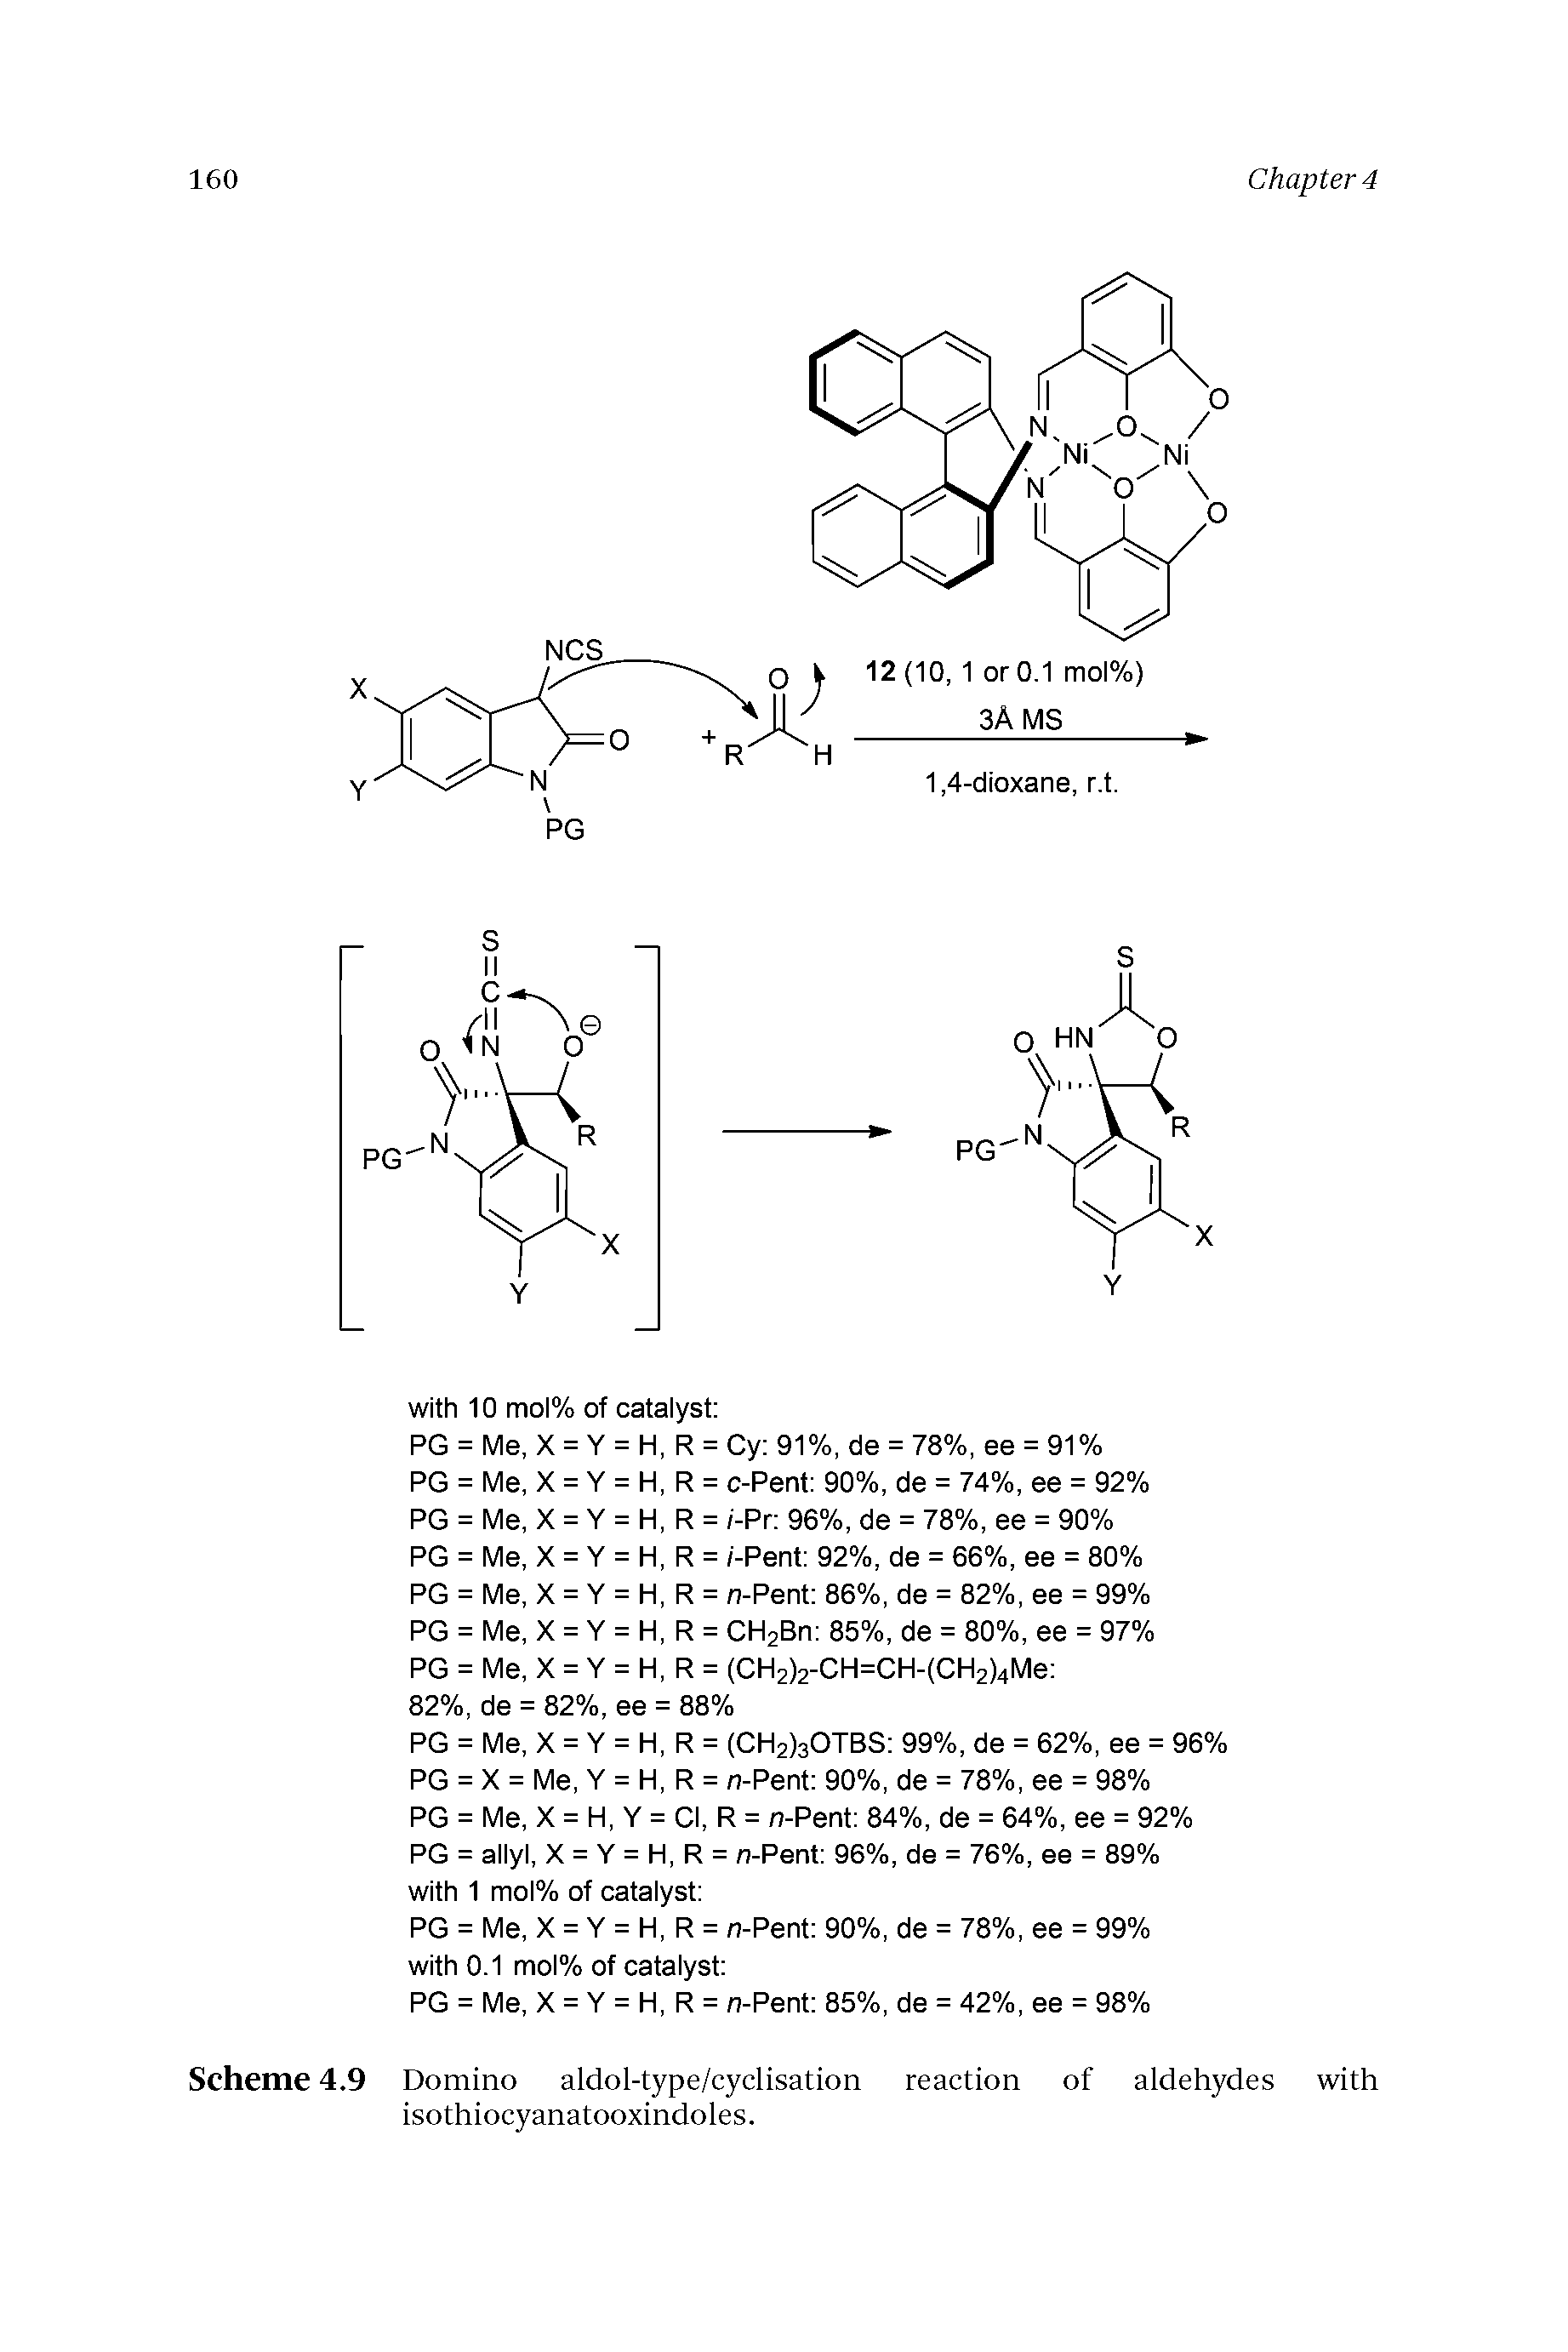 Scheme 4.9 Domino aldol-type/cyclisation reaction of aldehydes with isothiocyanatooxindoles.